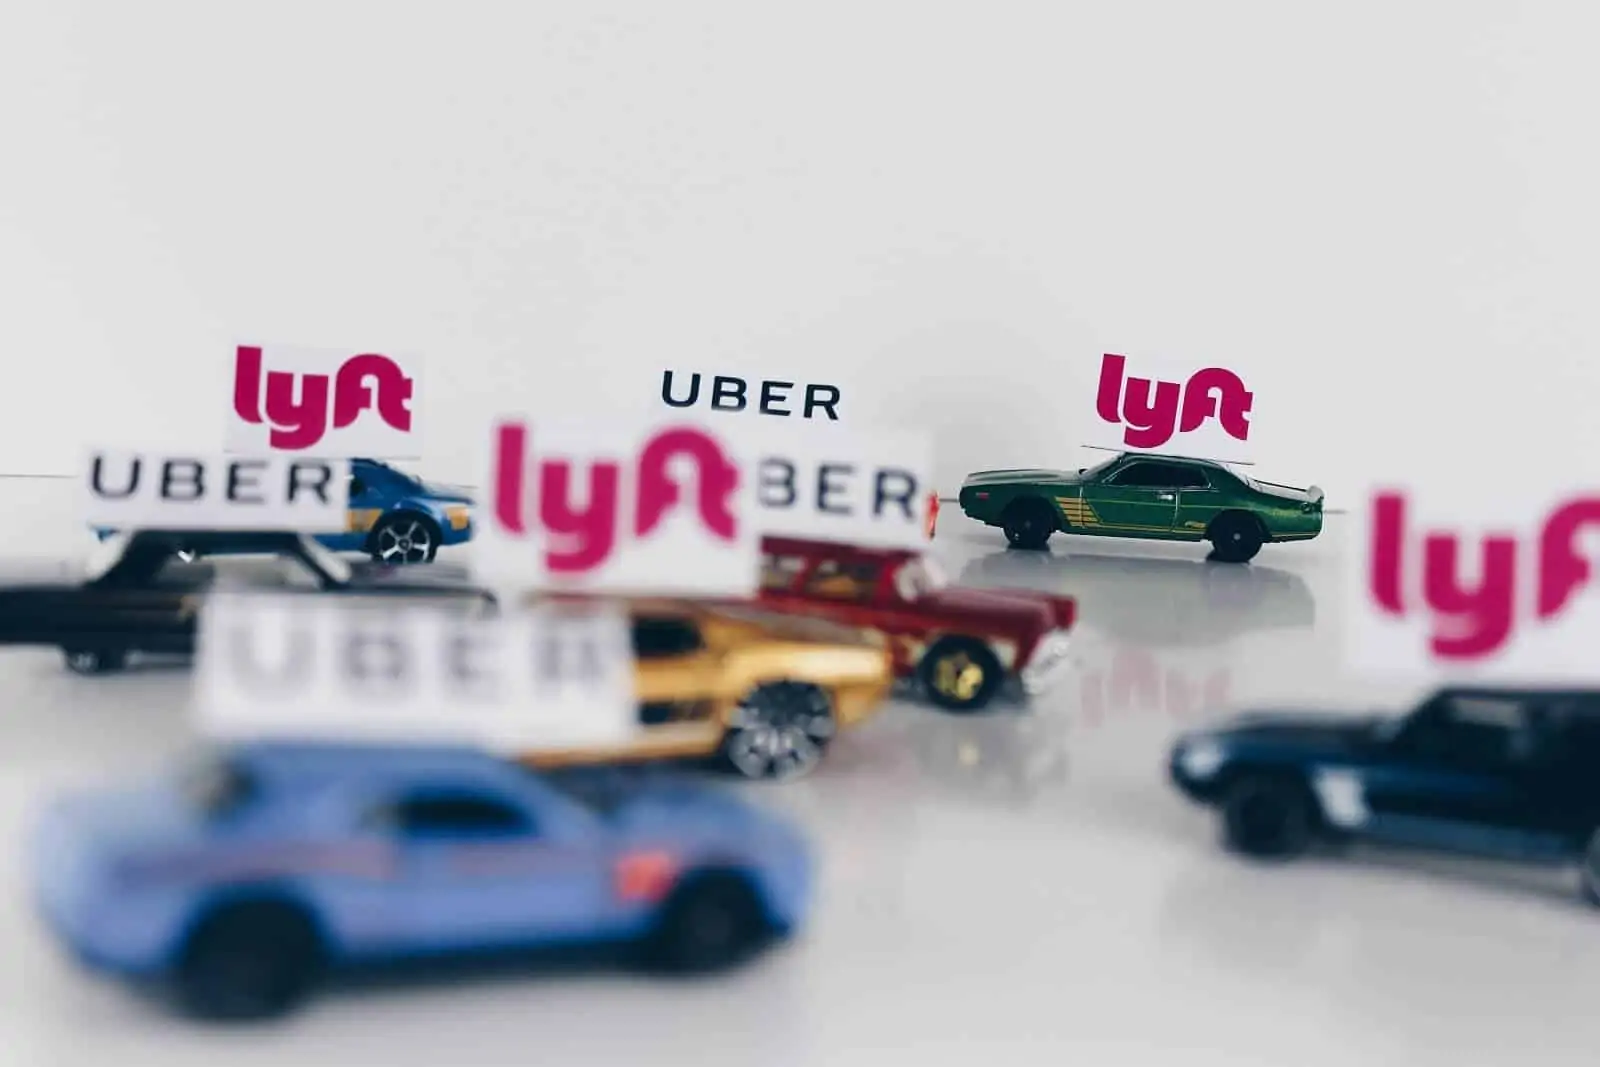 Miniature Uber and Lyft cars